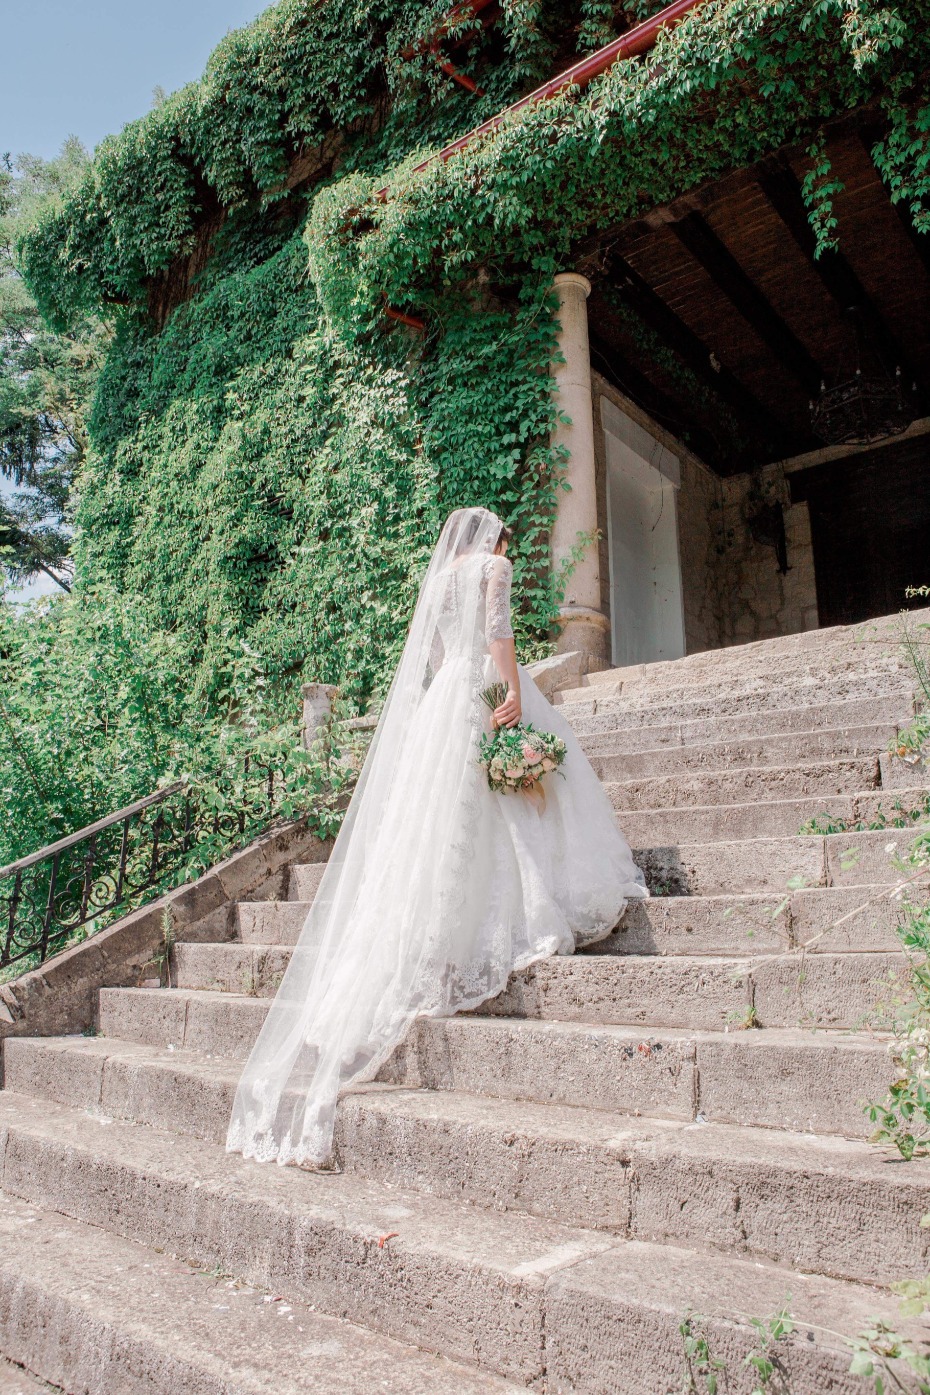 Bride ascending steps into ceremony